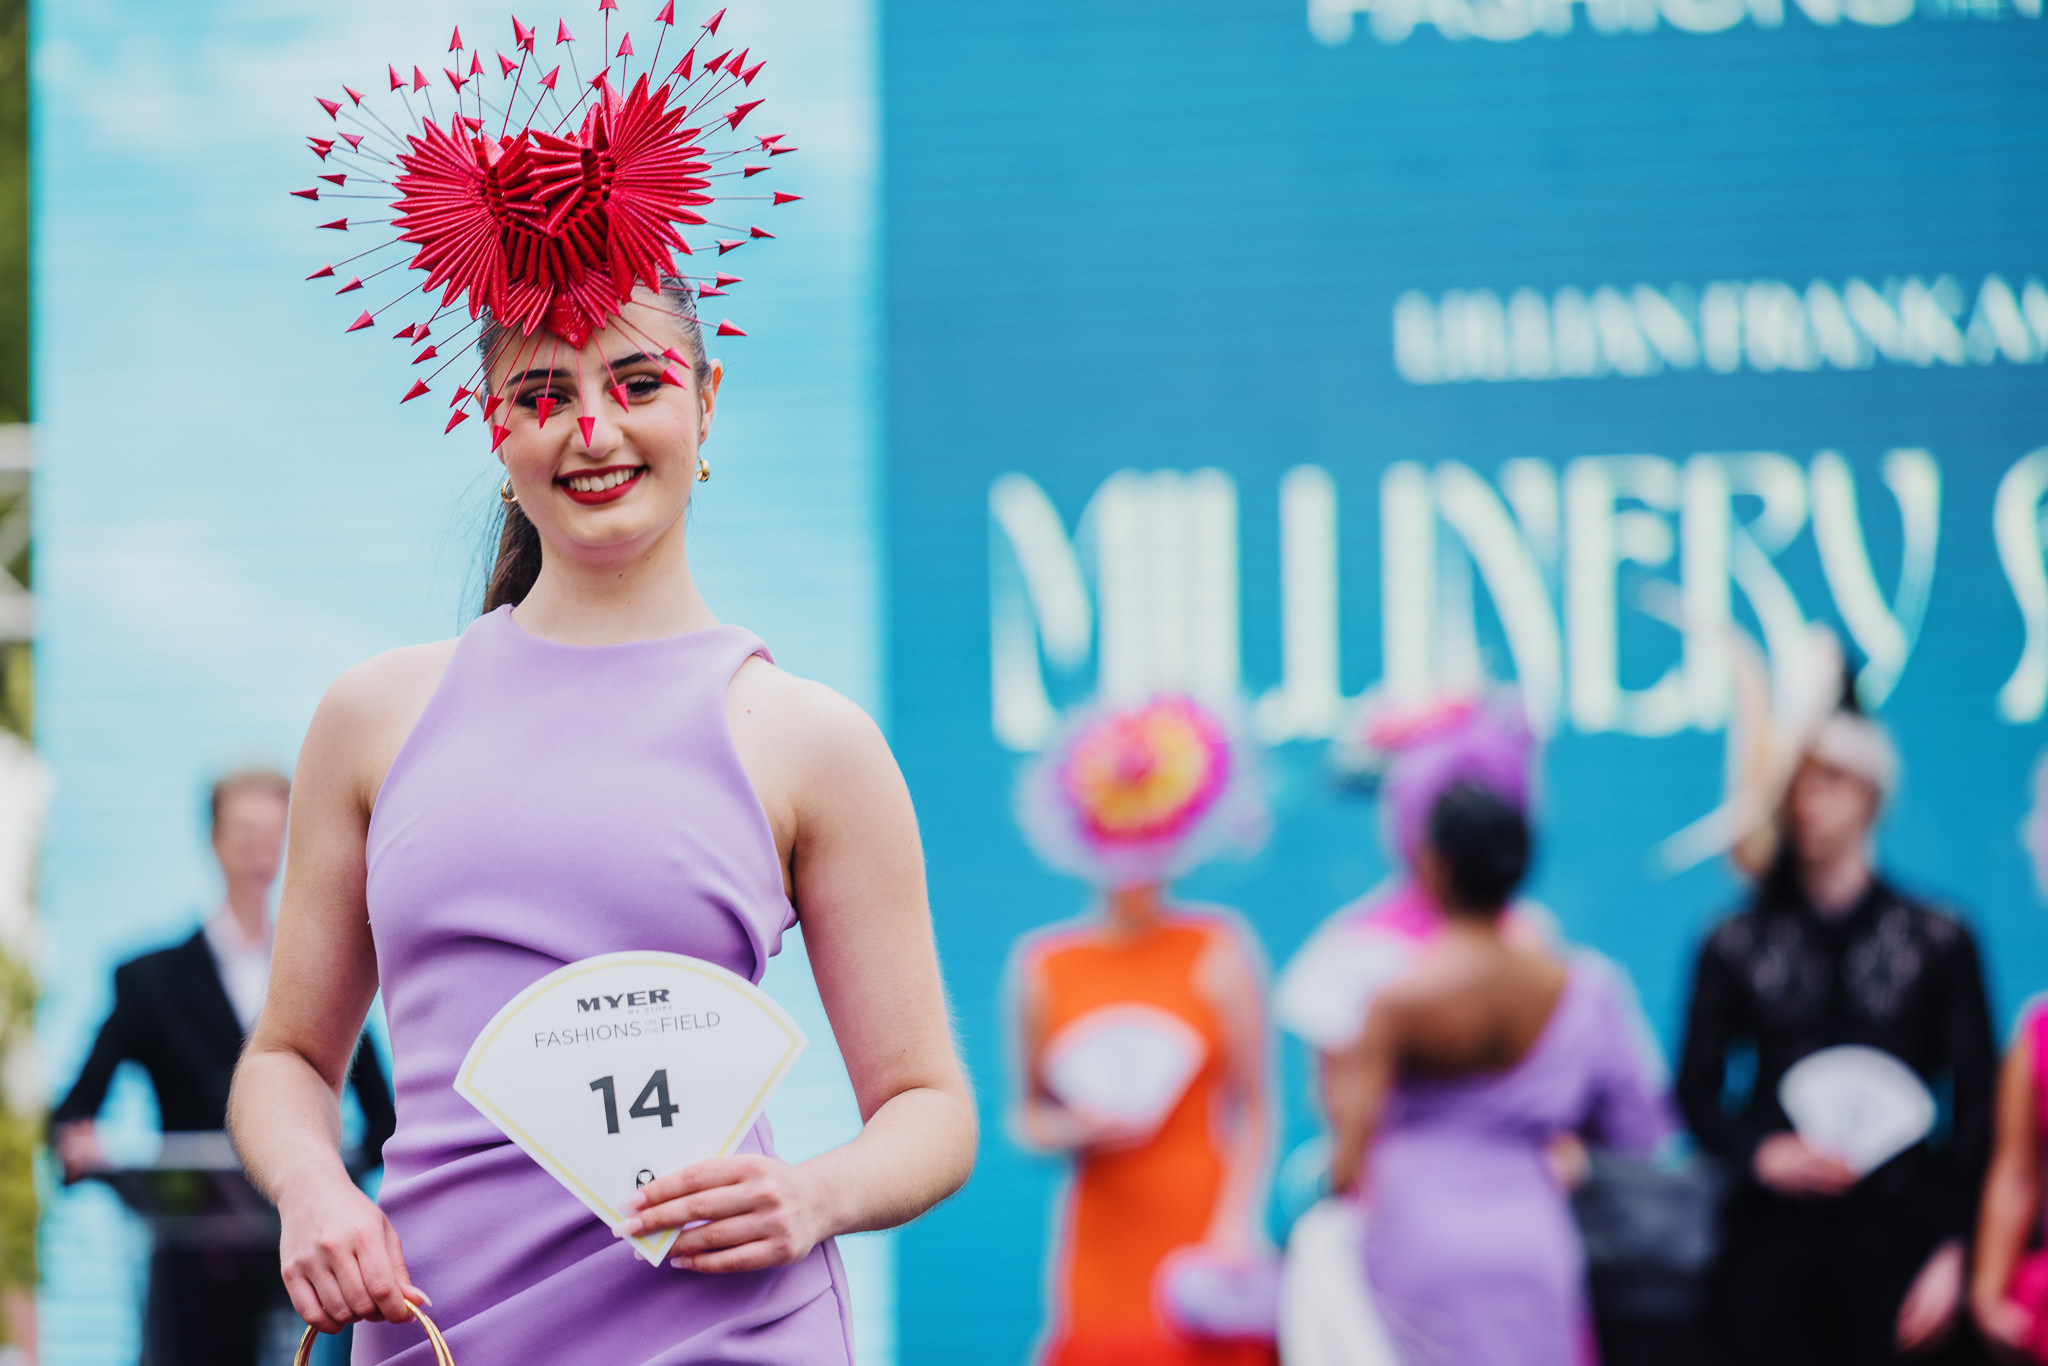 Natalie Bikicki Millinery at the Millinery Award 2022 - Runner up